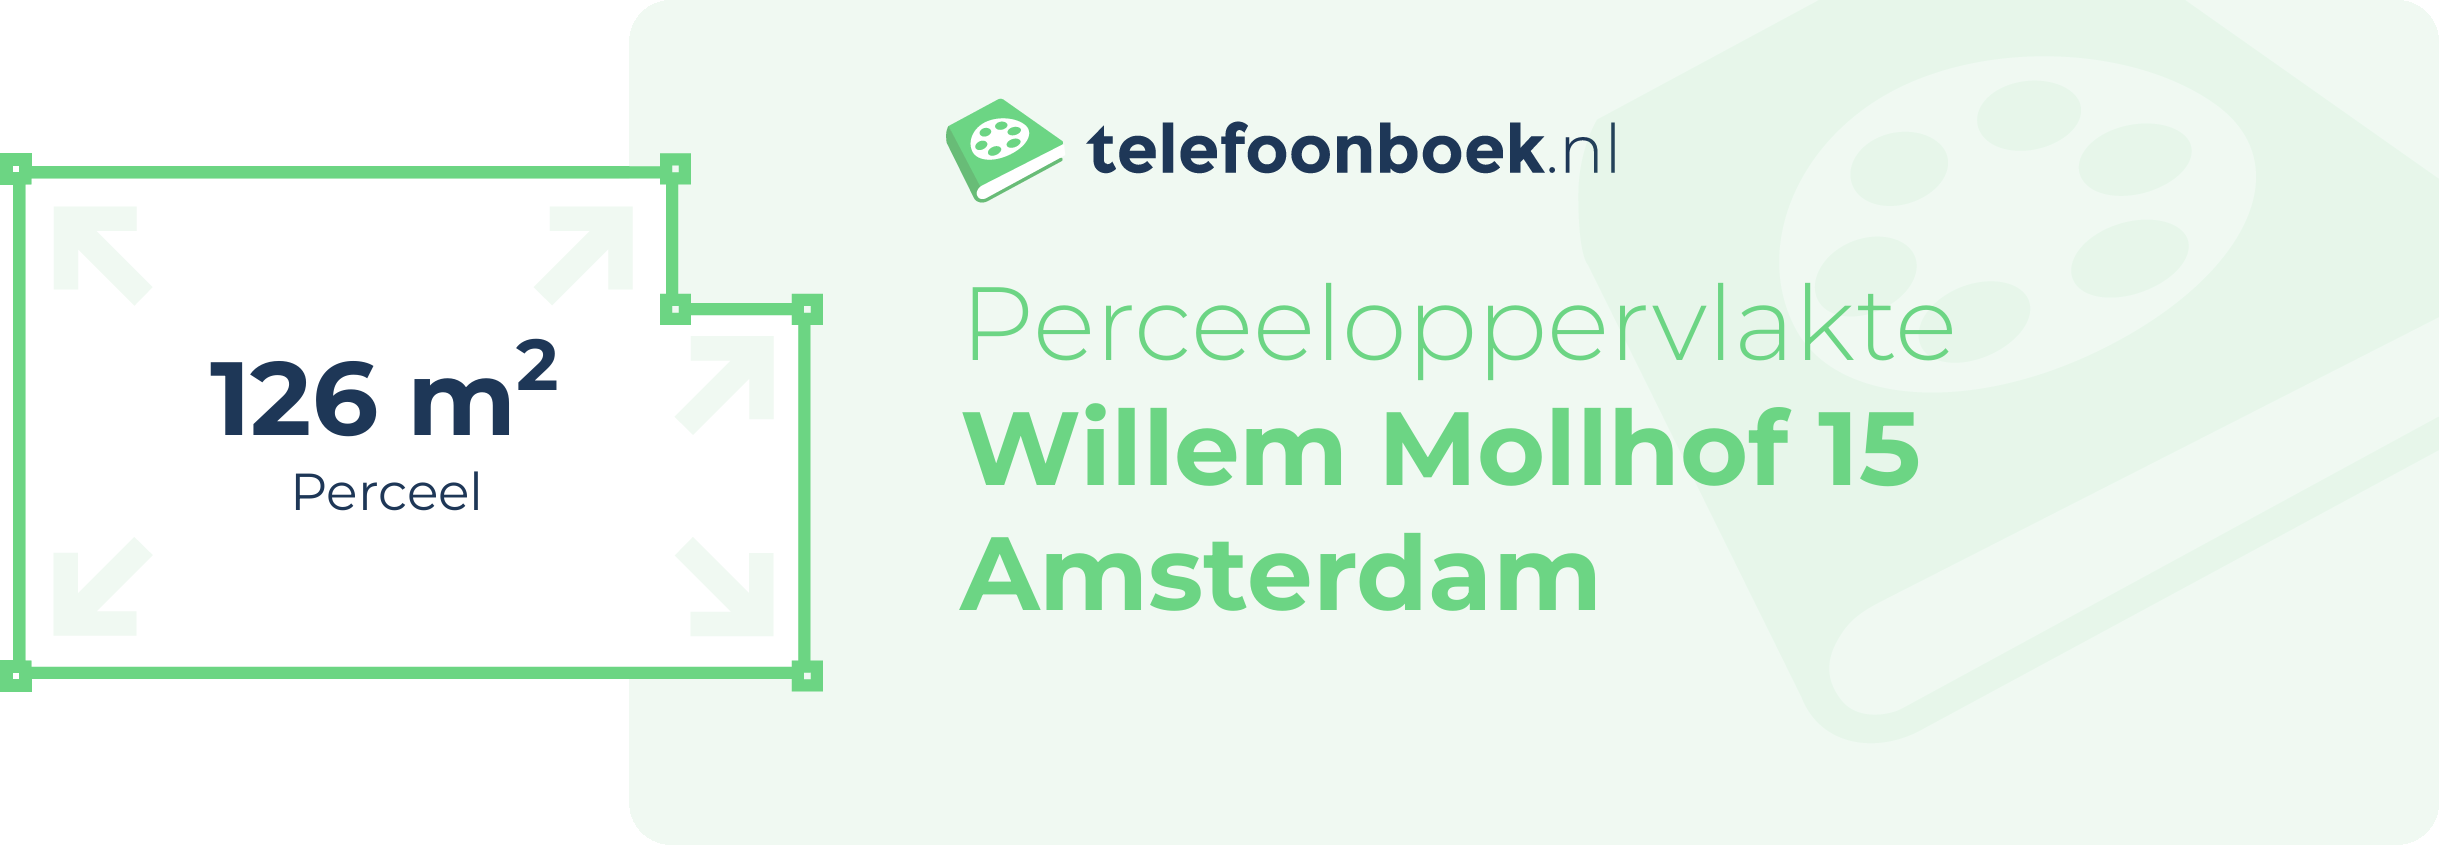 Perceeloppervlakte Willem Mollhof 15 Amsterdam